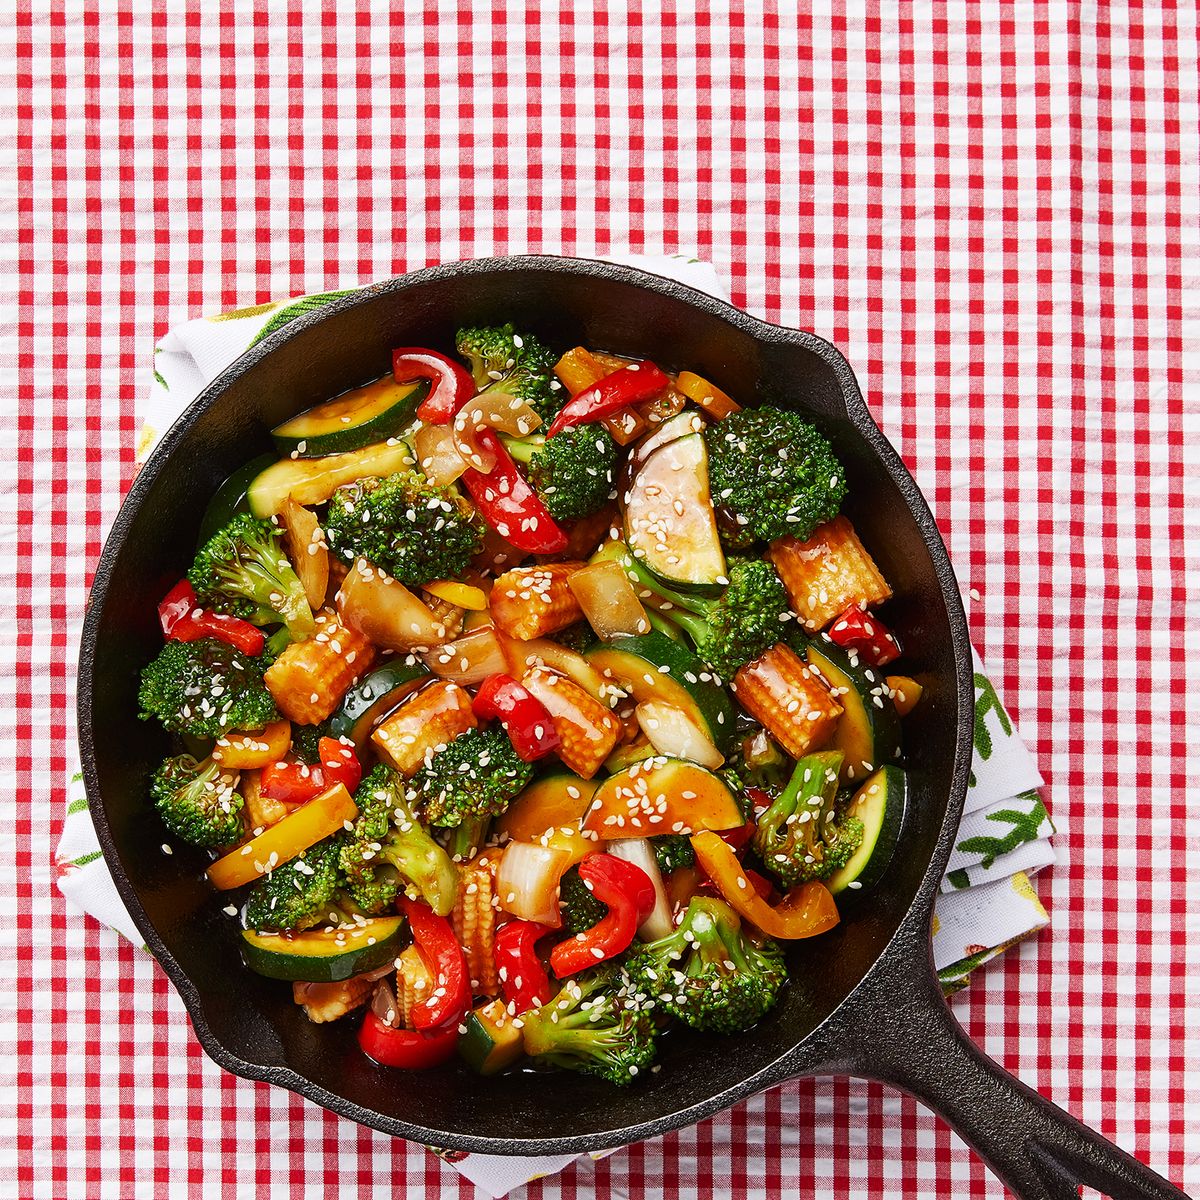 Everyday Vegetable Stir-Fry - The Woks of Life